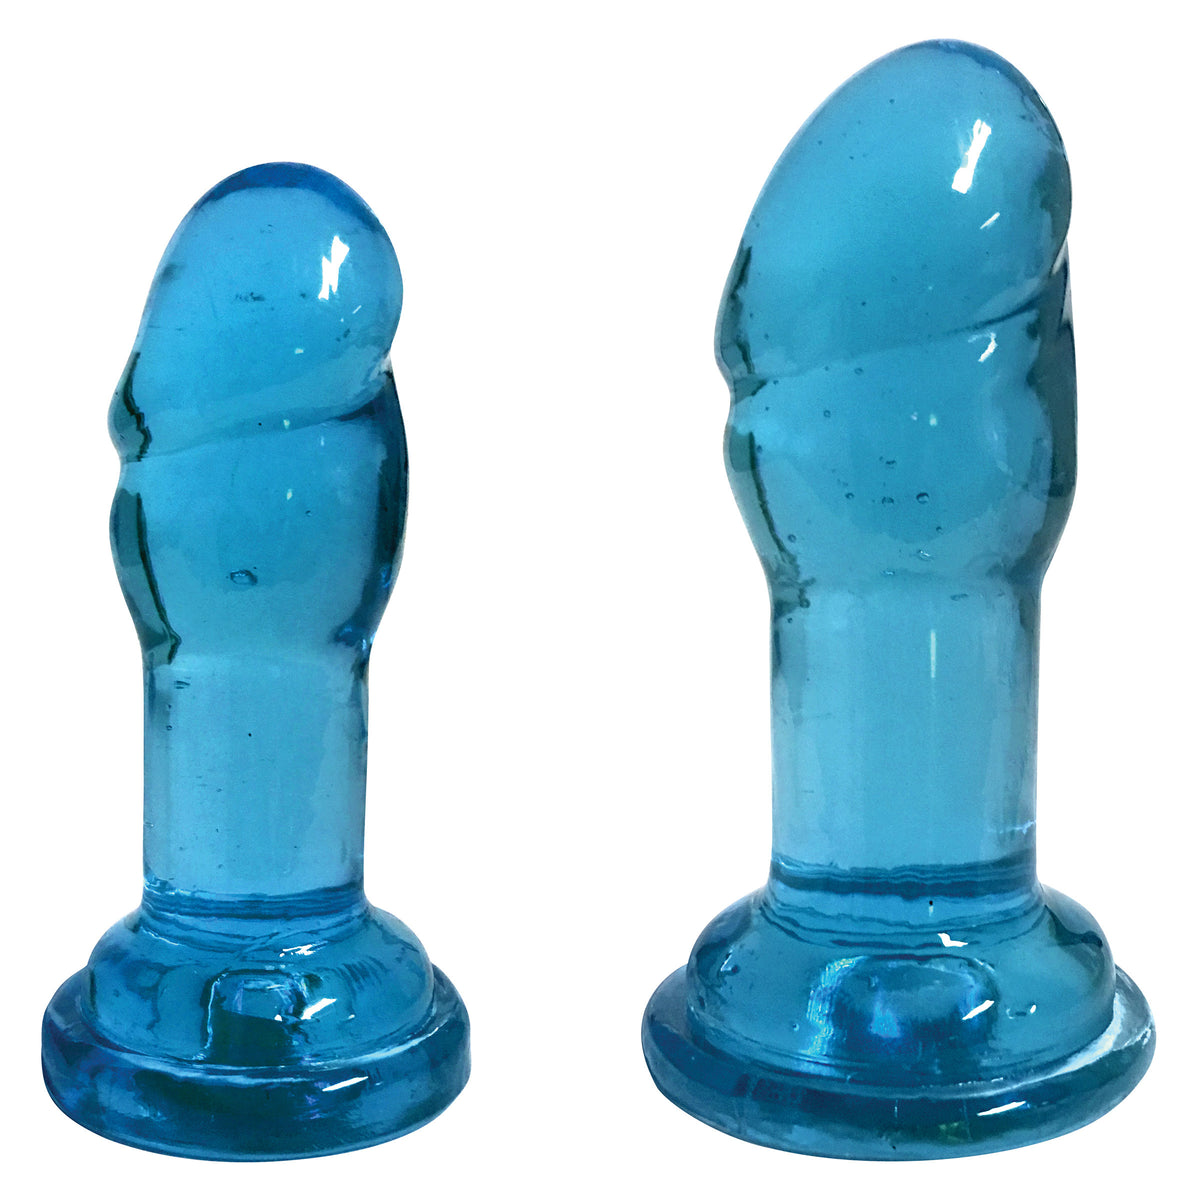 Lollicock Slim Stick Duo Suction Cup Dildos - Blue